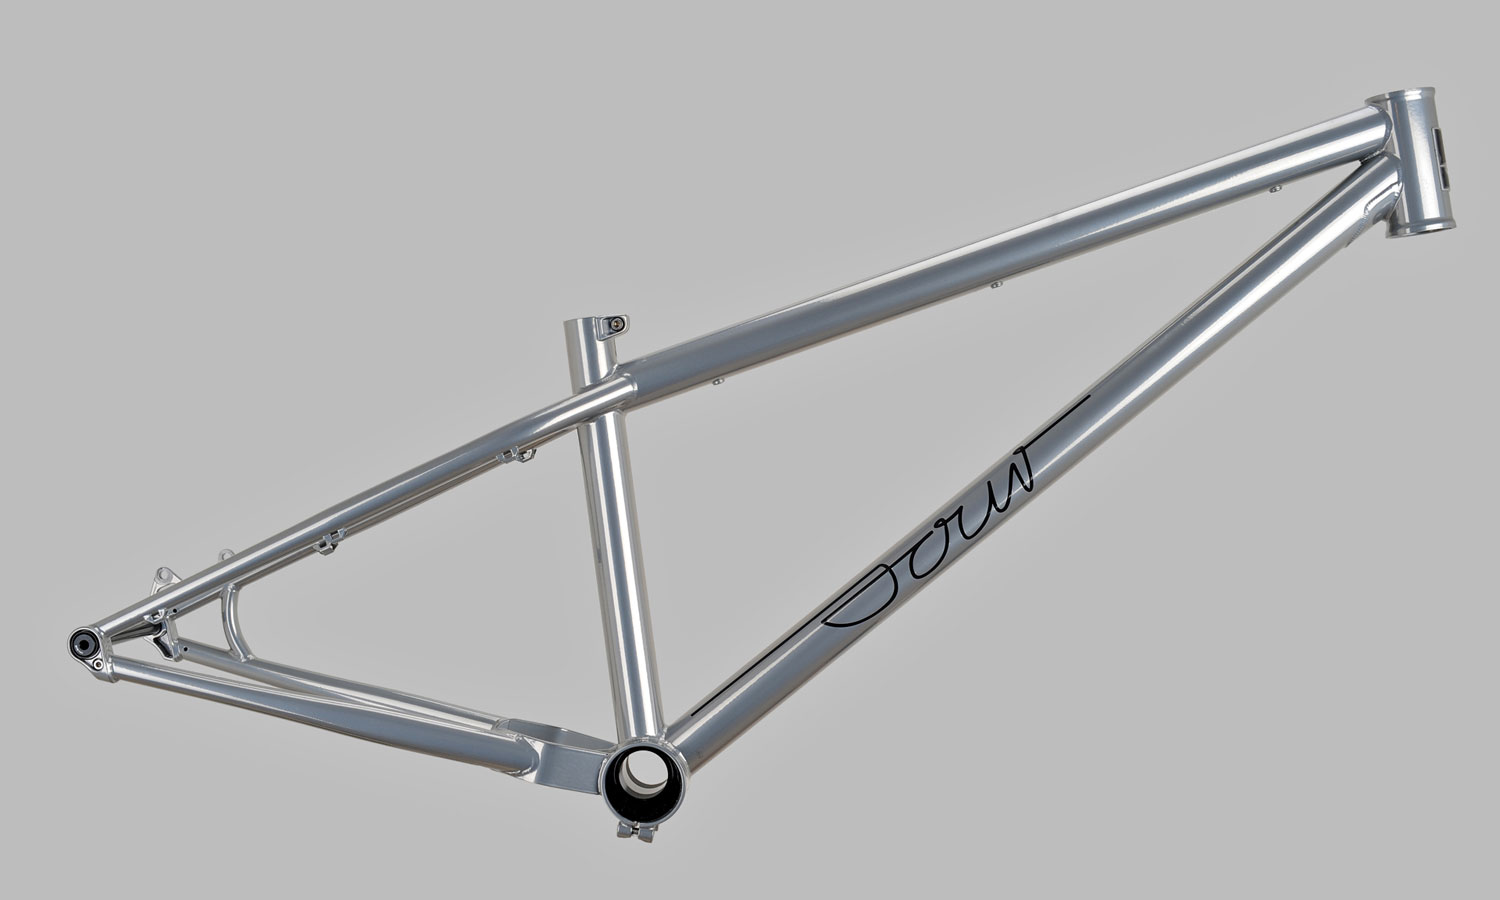 2021 Sour Bikes affordable steel frame updates CanCan